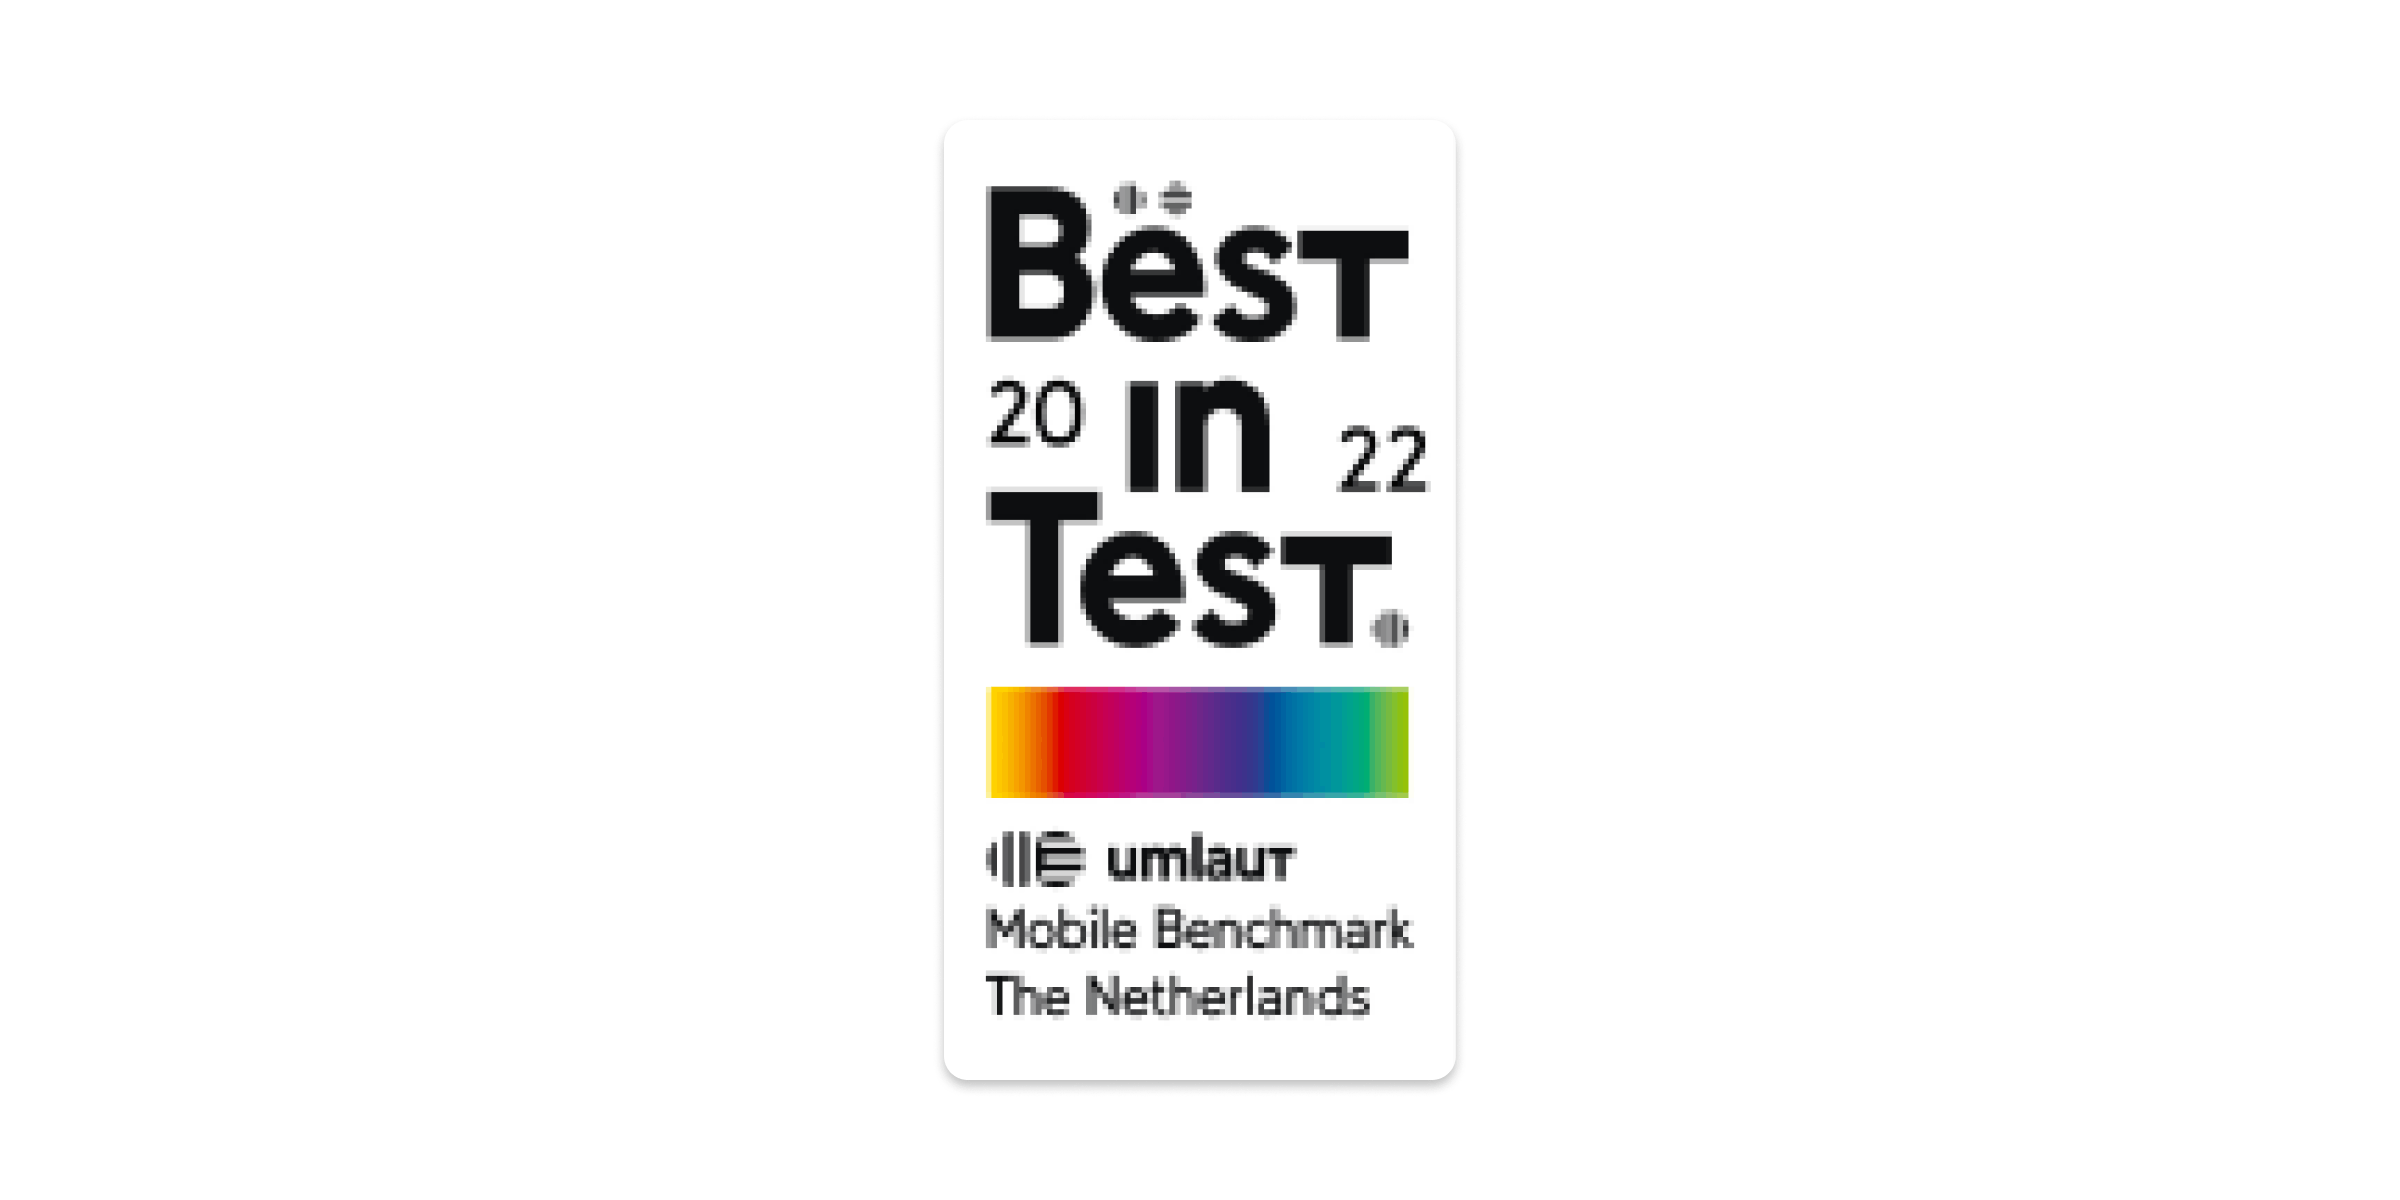 Best in test 2022 - Umlaut Mobile Benchmark The Netherlands